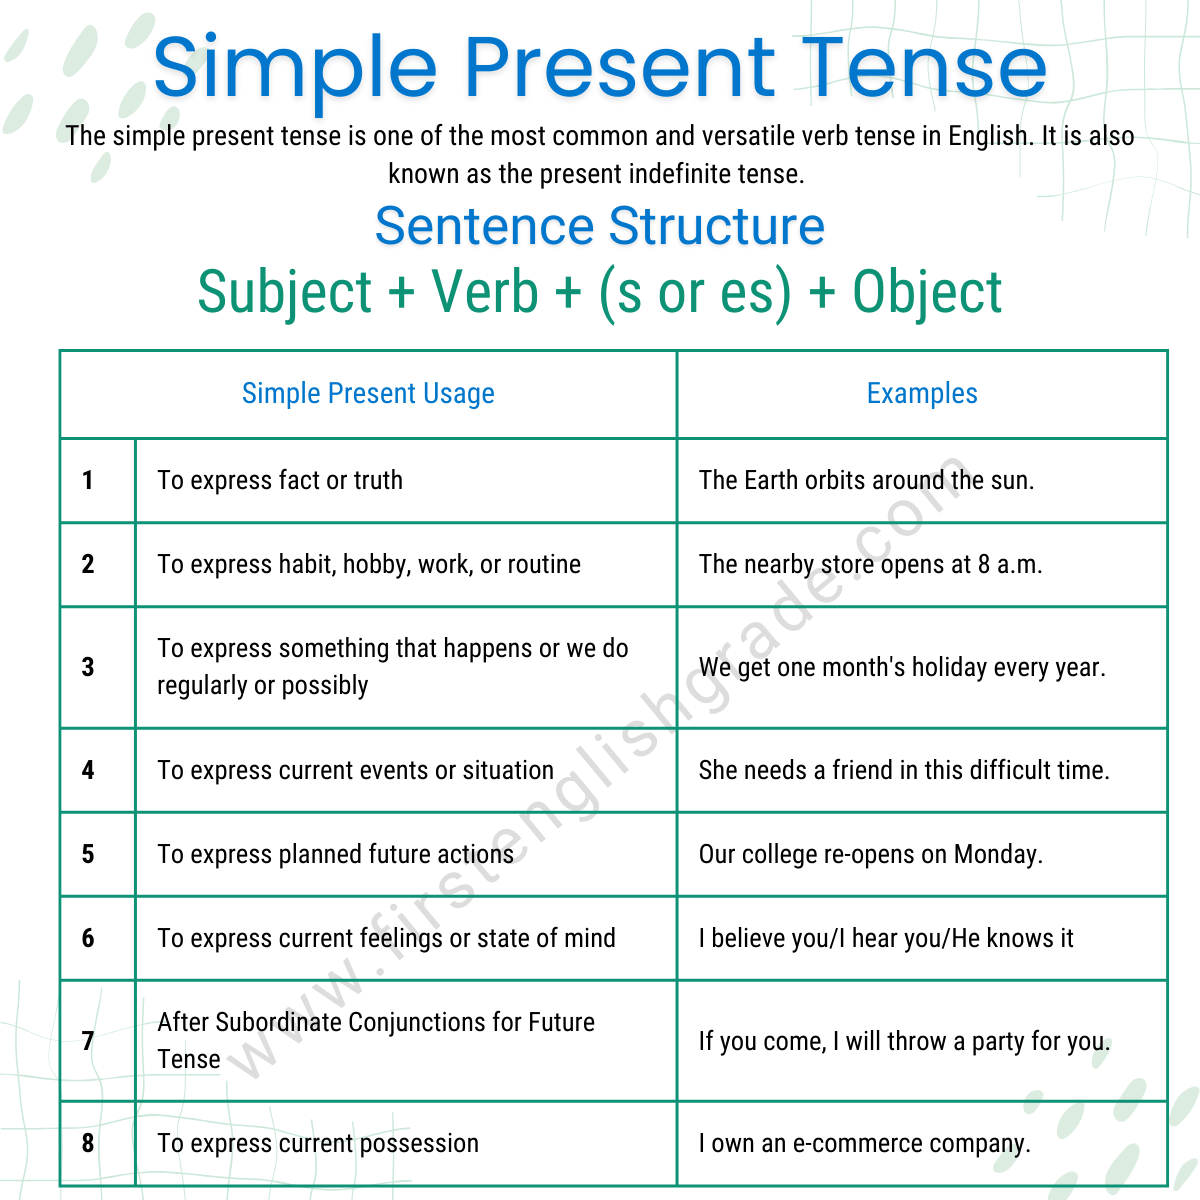 Simple present tense structure